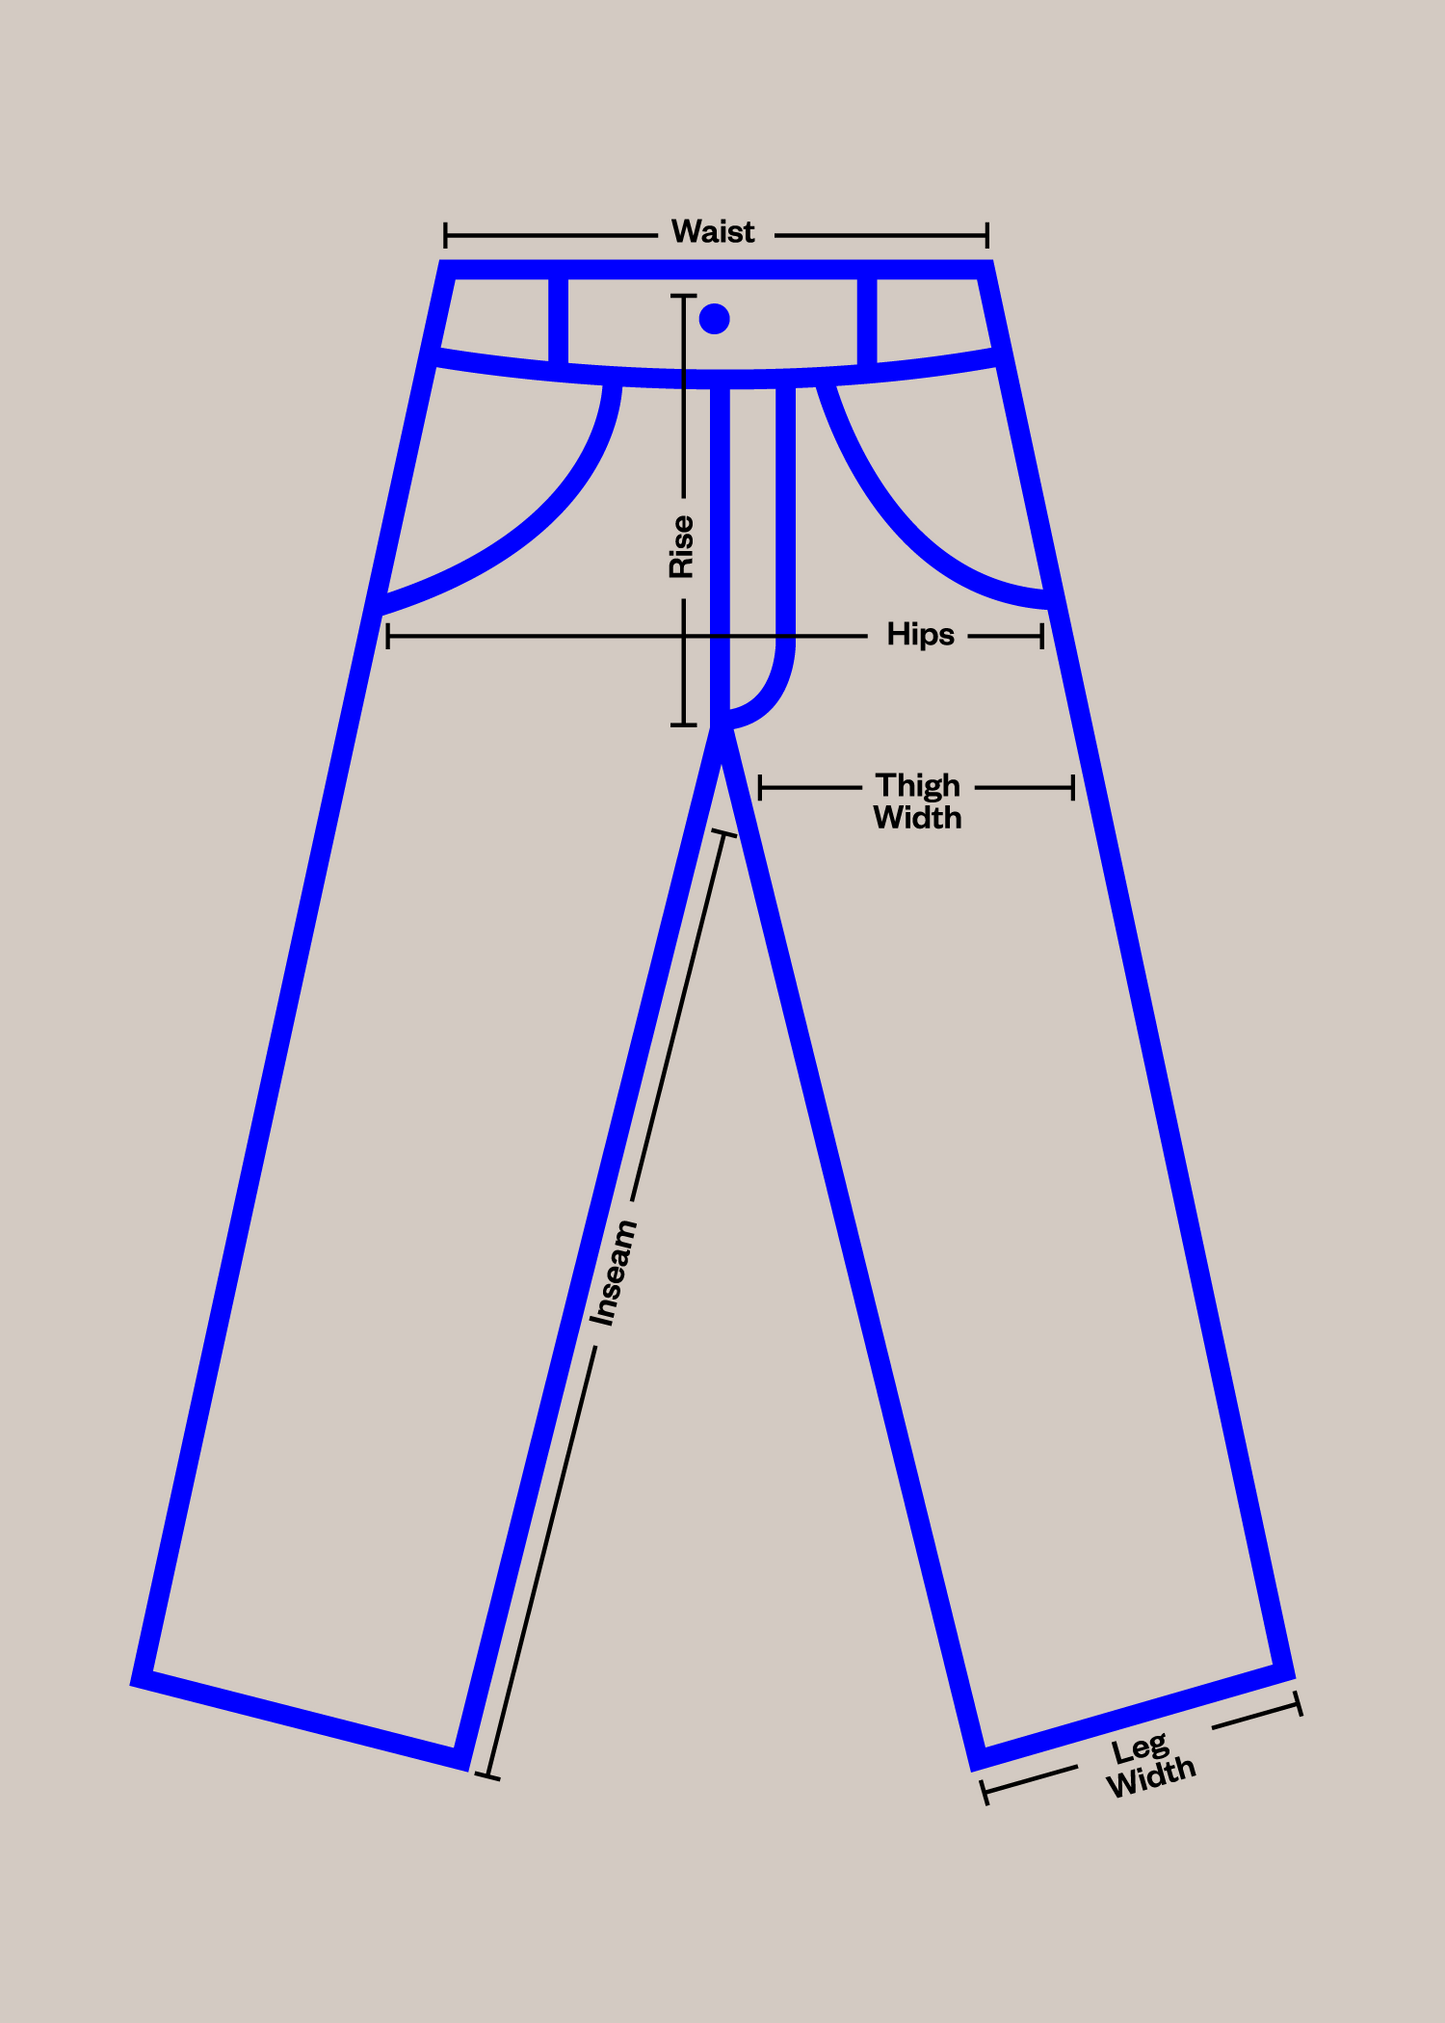 1980s I.C.U Drawstring Sweatpants Size S/M